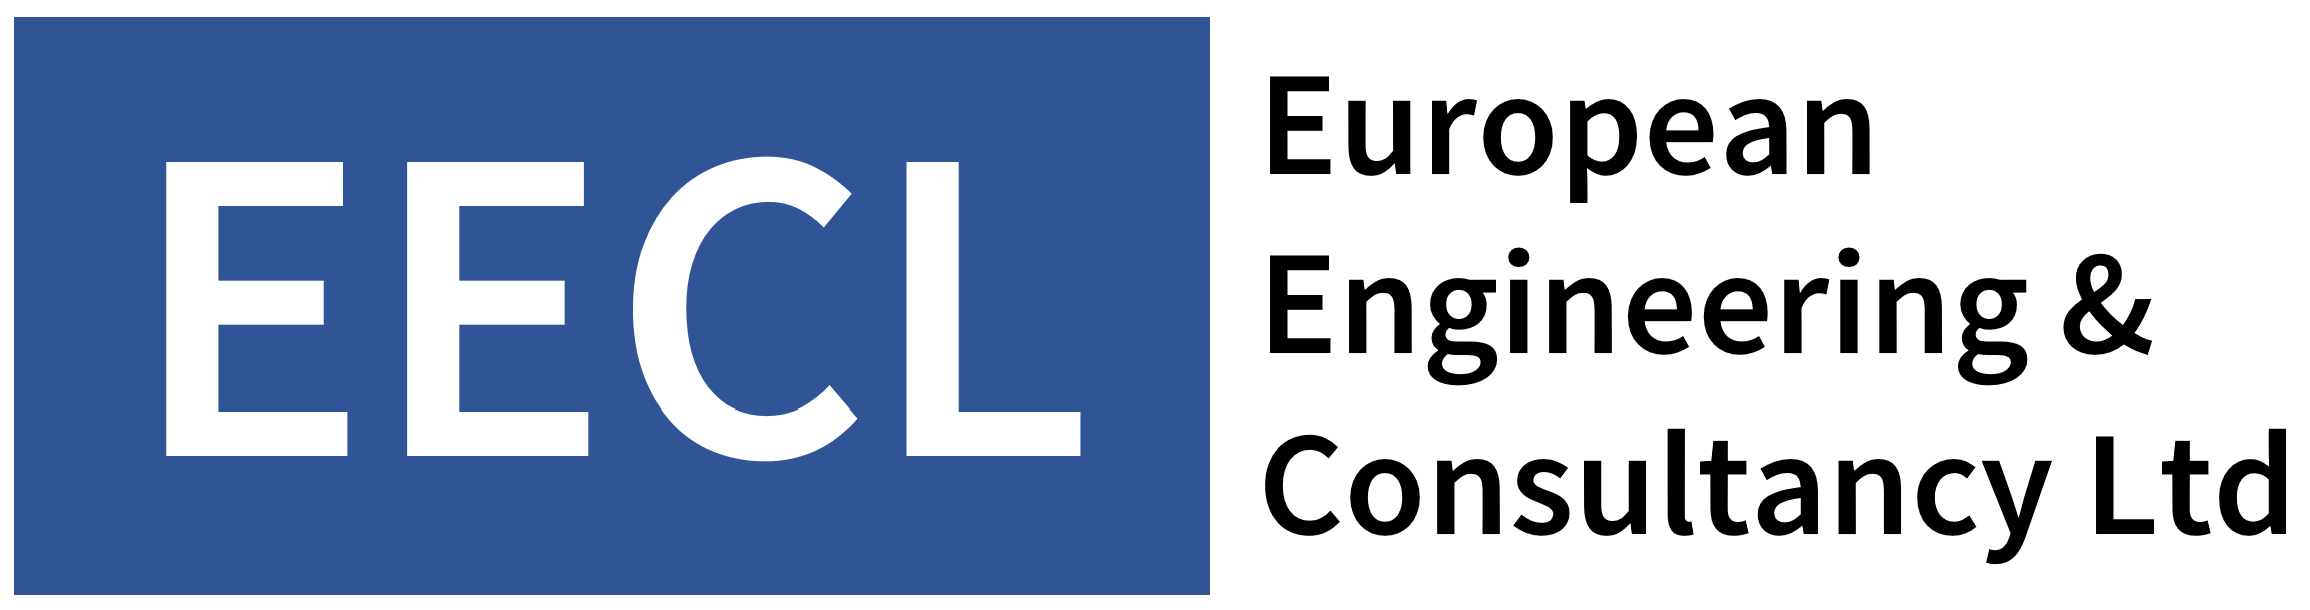 European Engineering & Consultancy